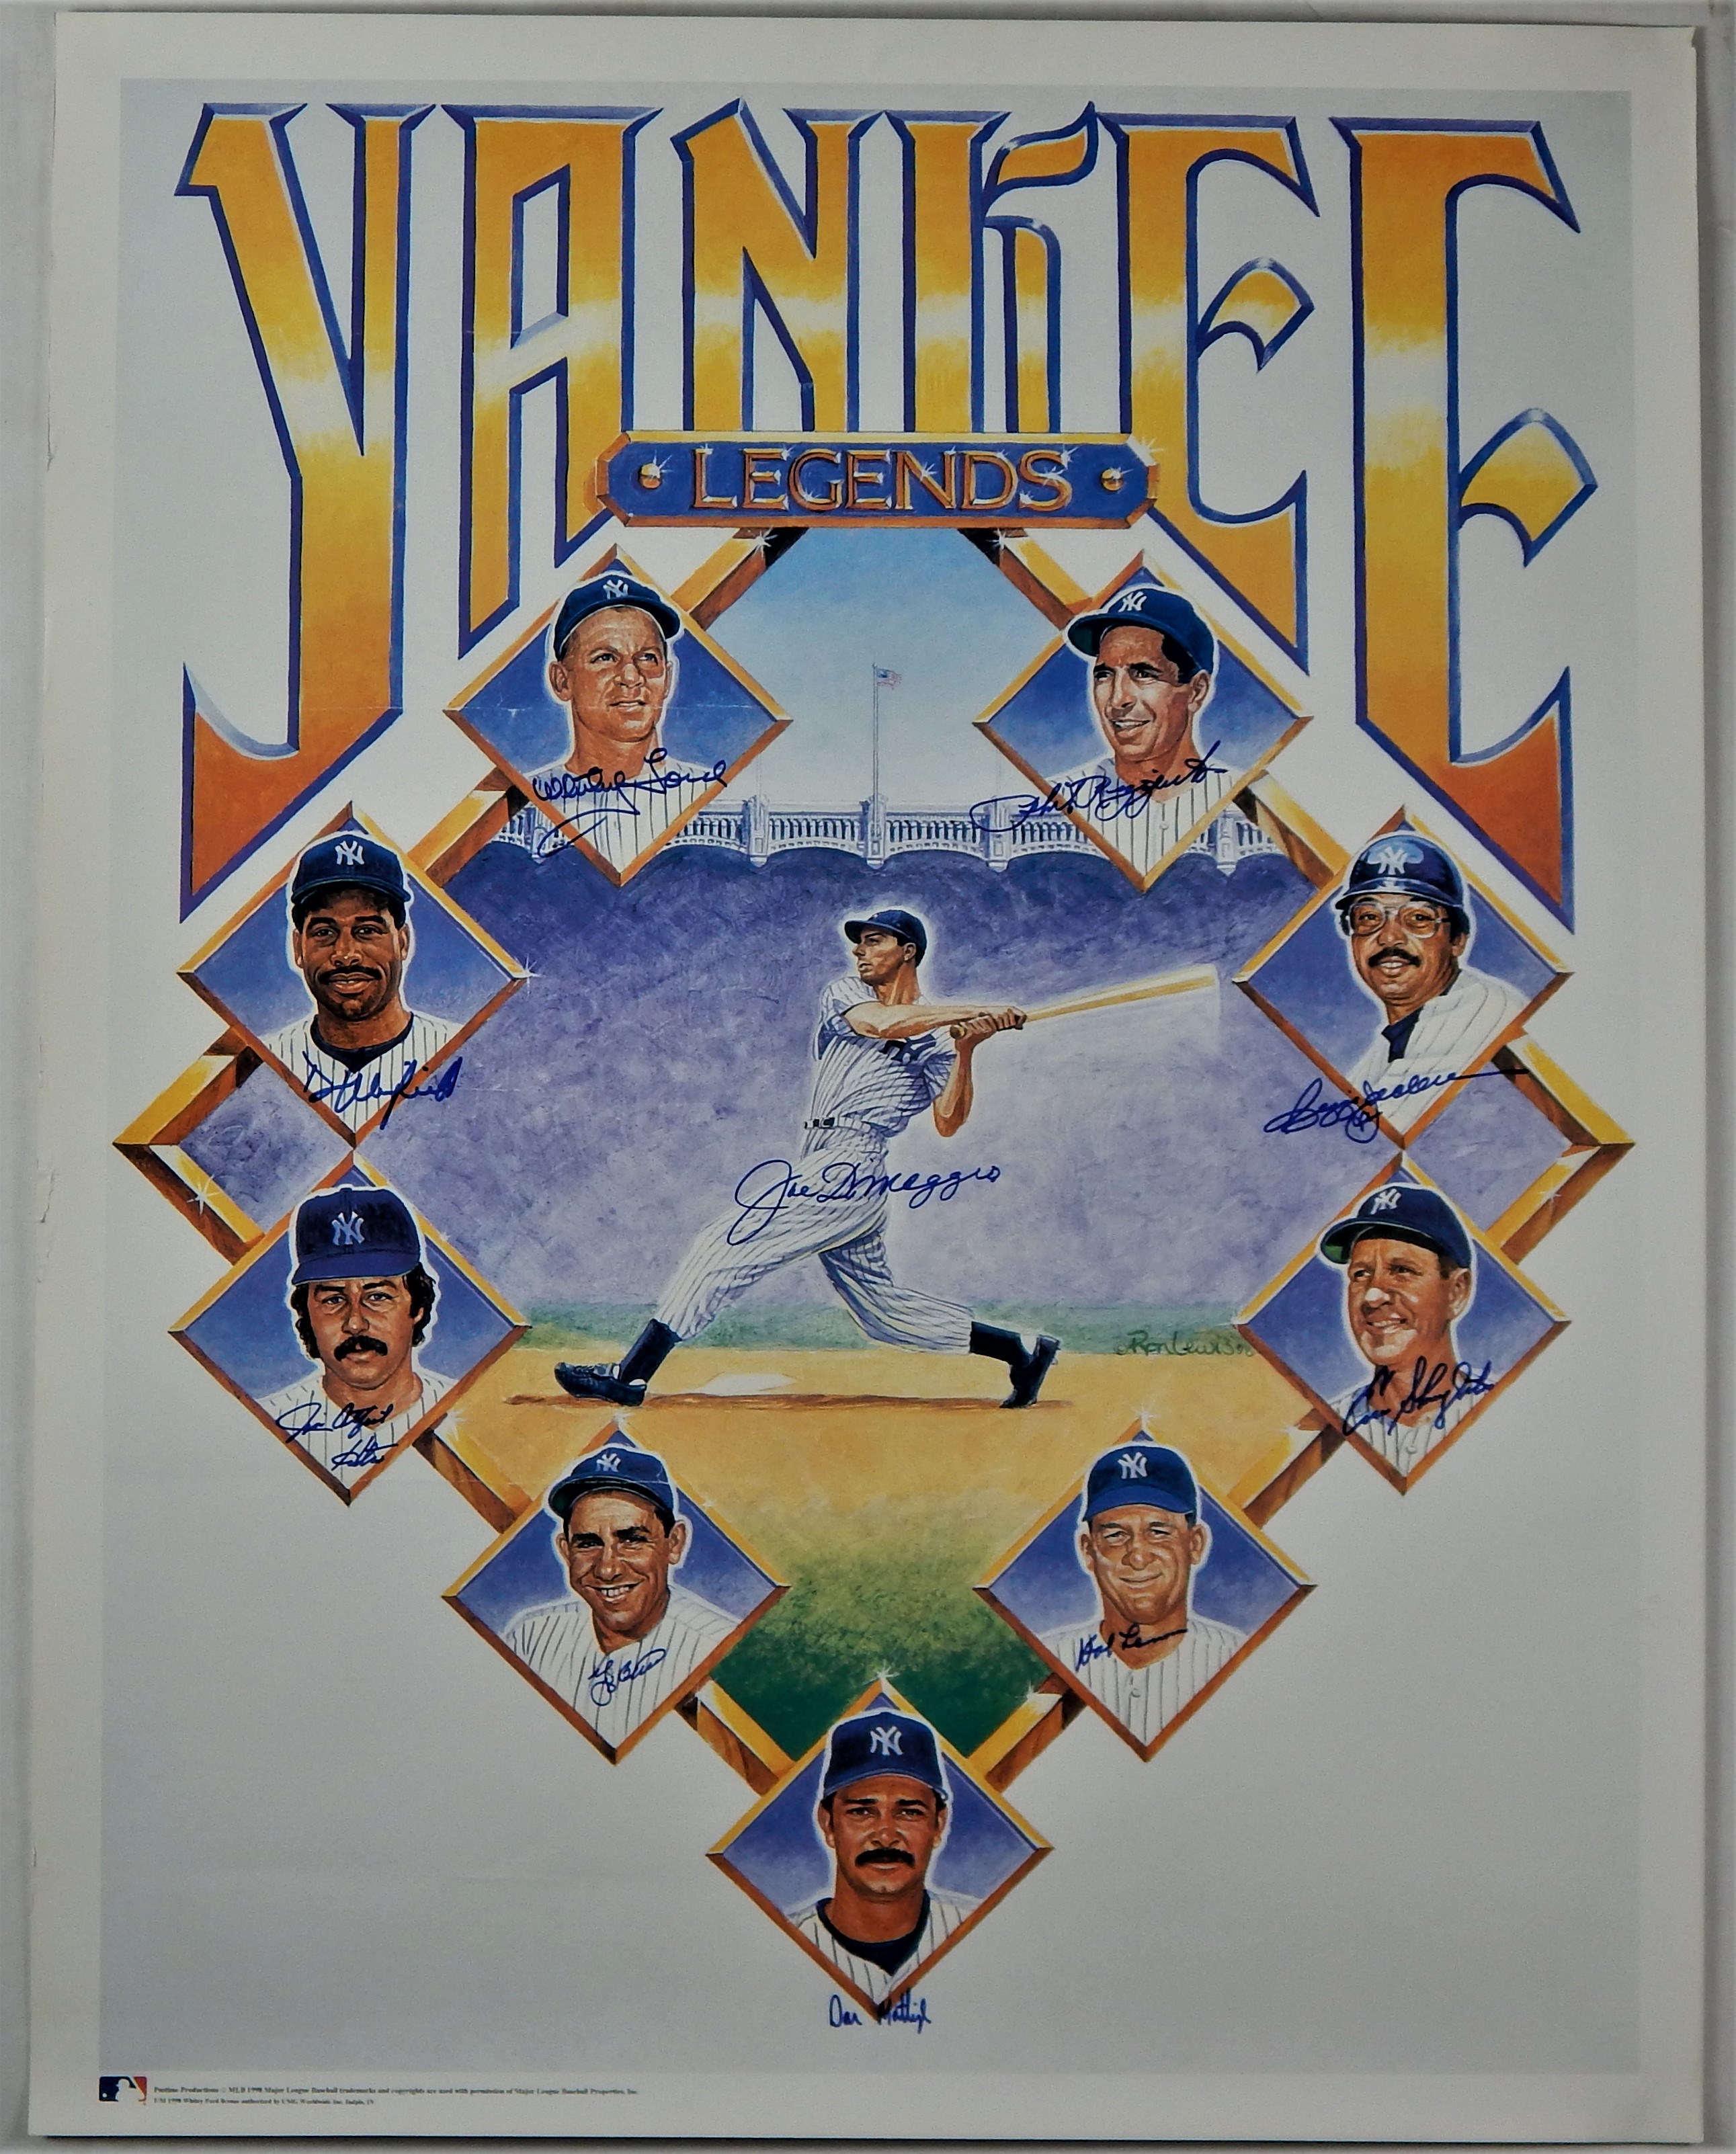 - 1998 "Yankee Legends" Signed Print